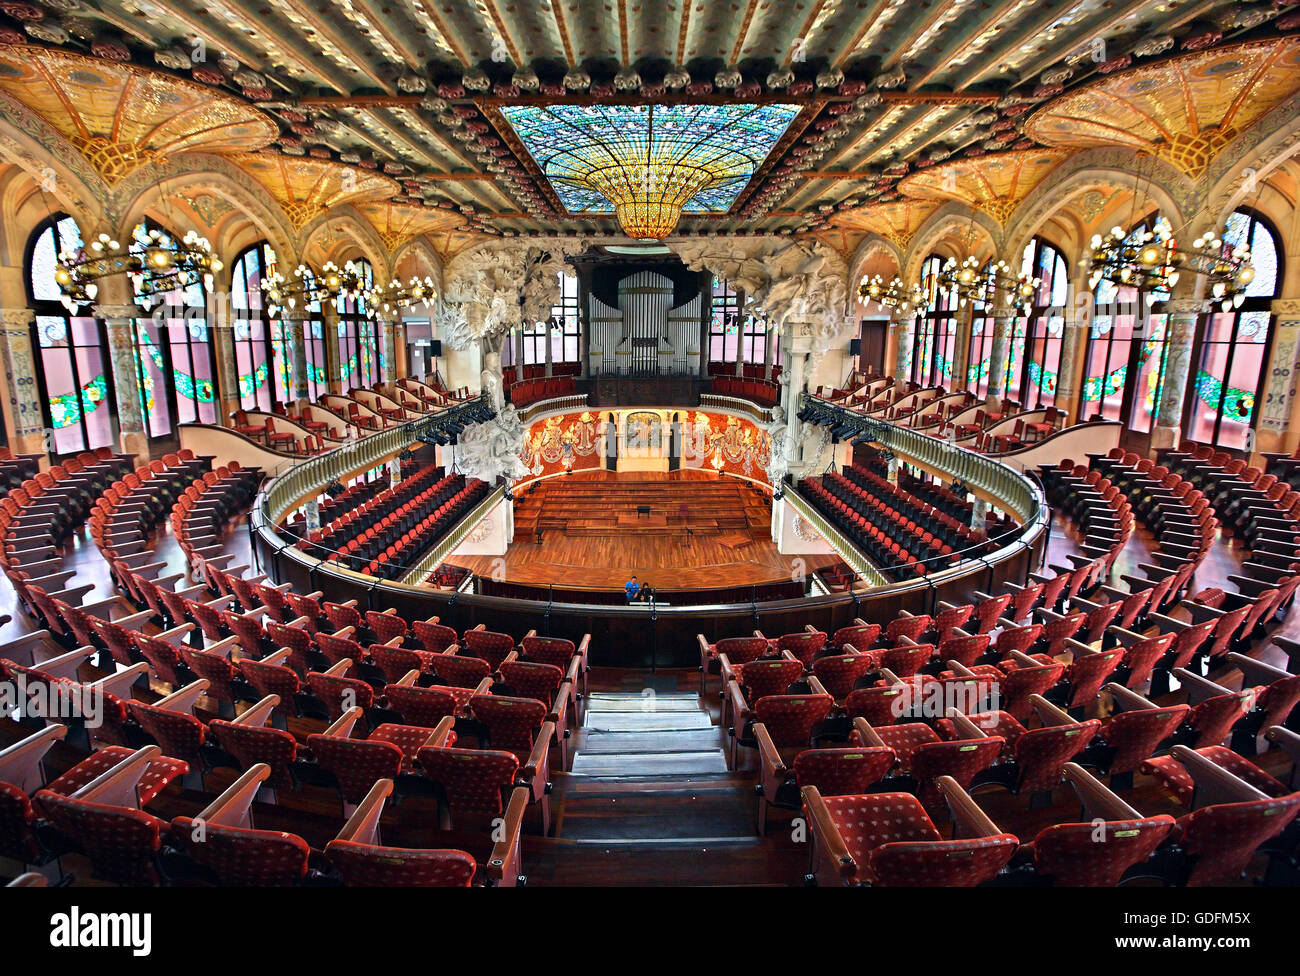 The central concert hall in the Palau de la Musica Catalana, Barcelona, Catalunya, Spain. Stock Photo